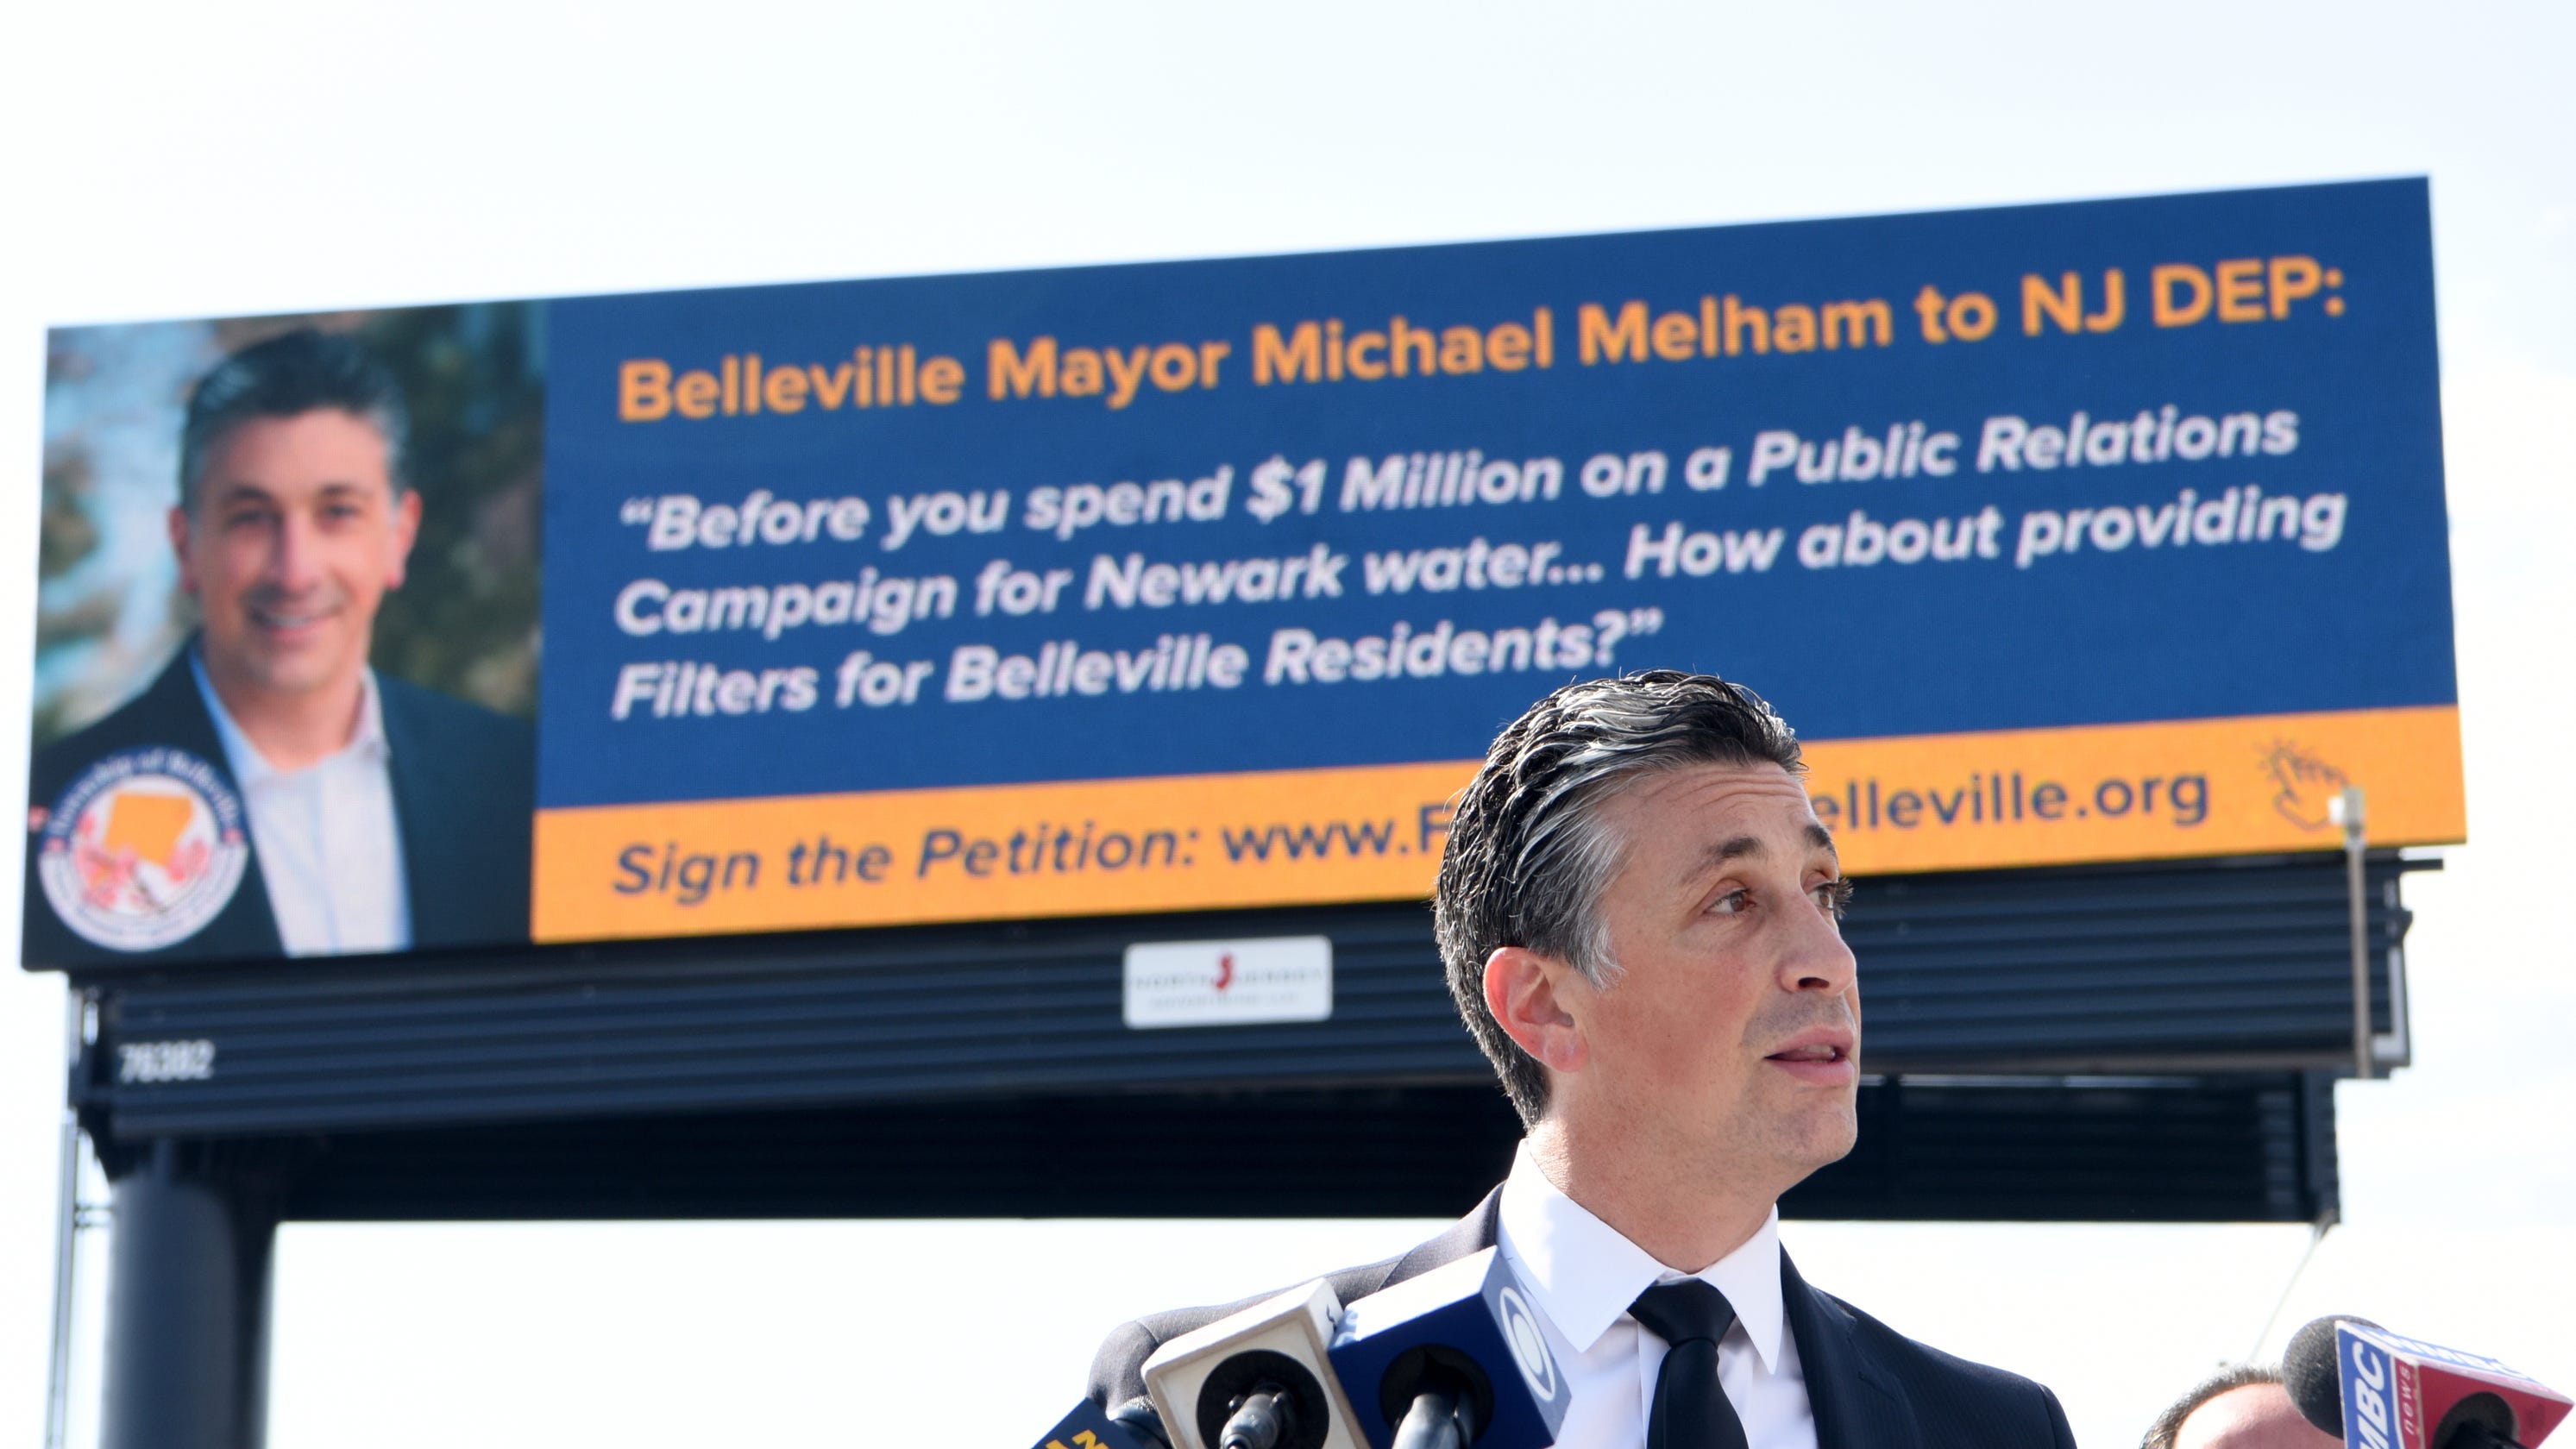 Belleville mayor uses billboard to as plea to DEP amid lead worries - NorthJersey.com